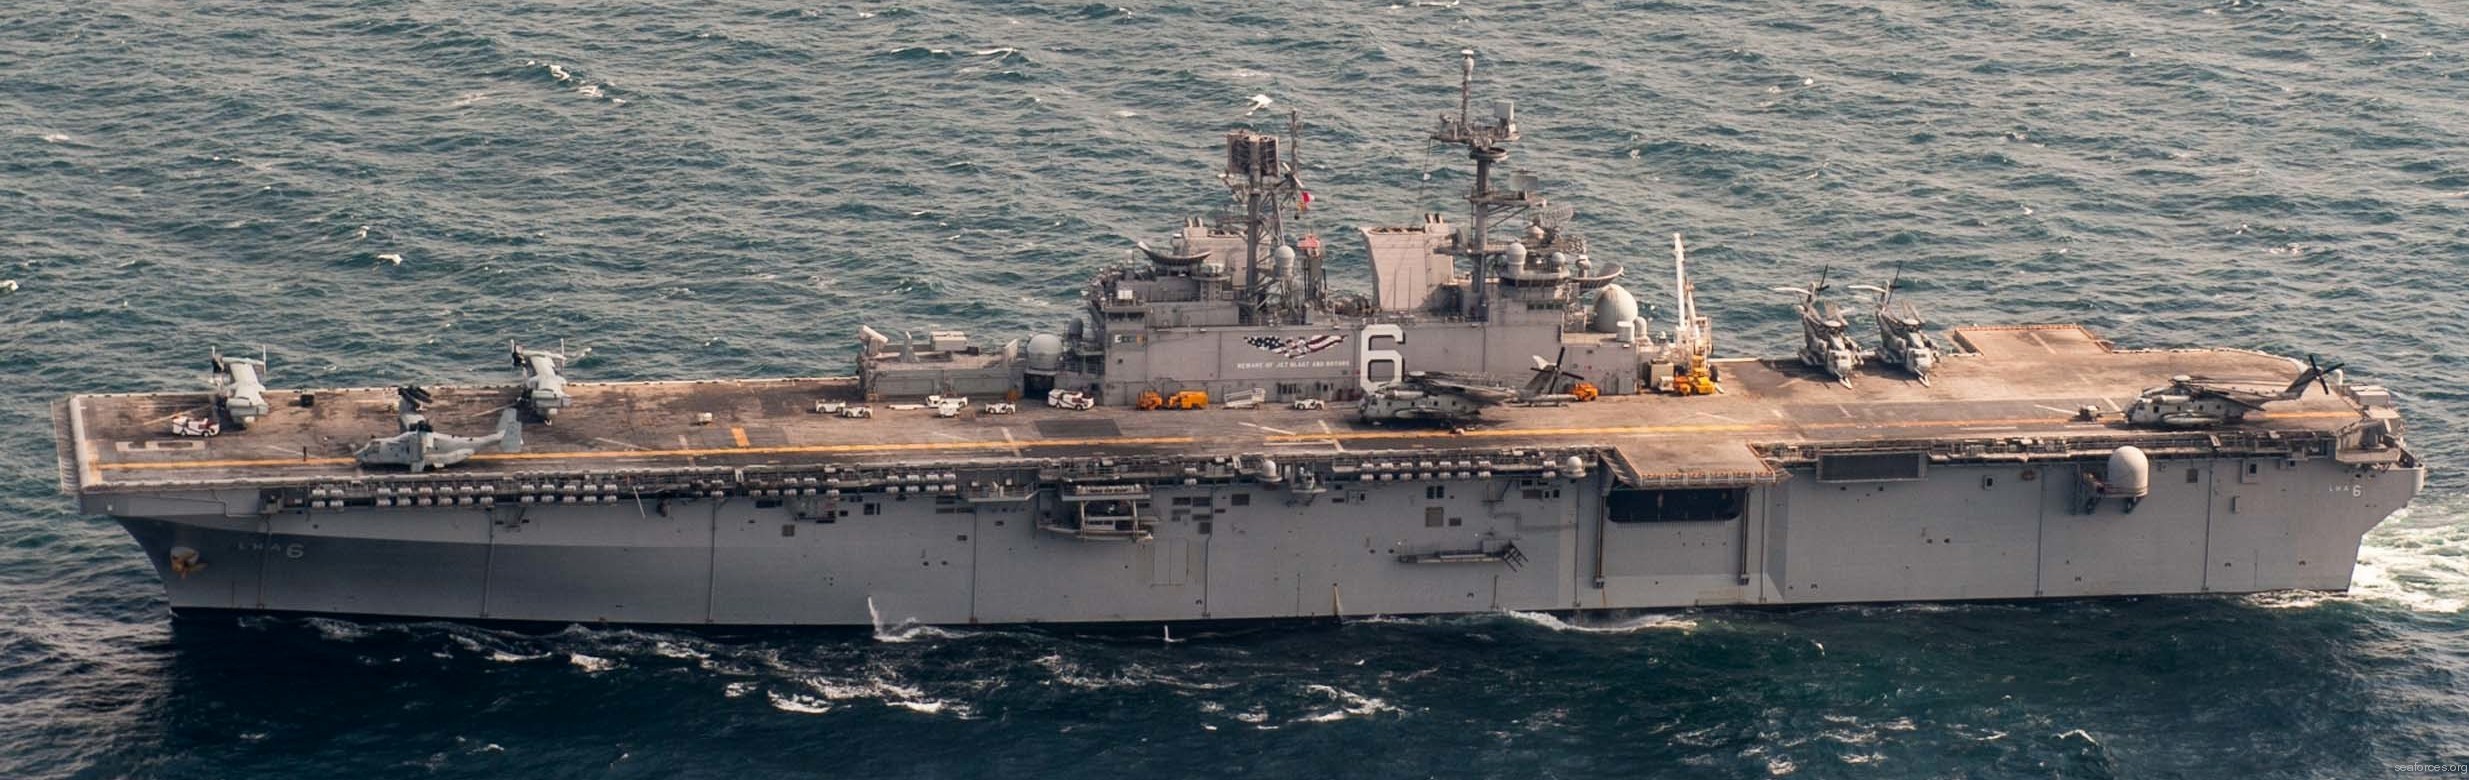 lha-6 uss america amphibious assault ship us navy 104